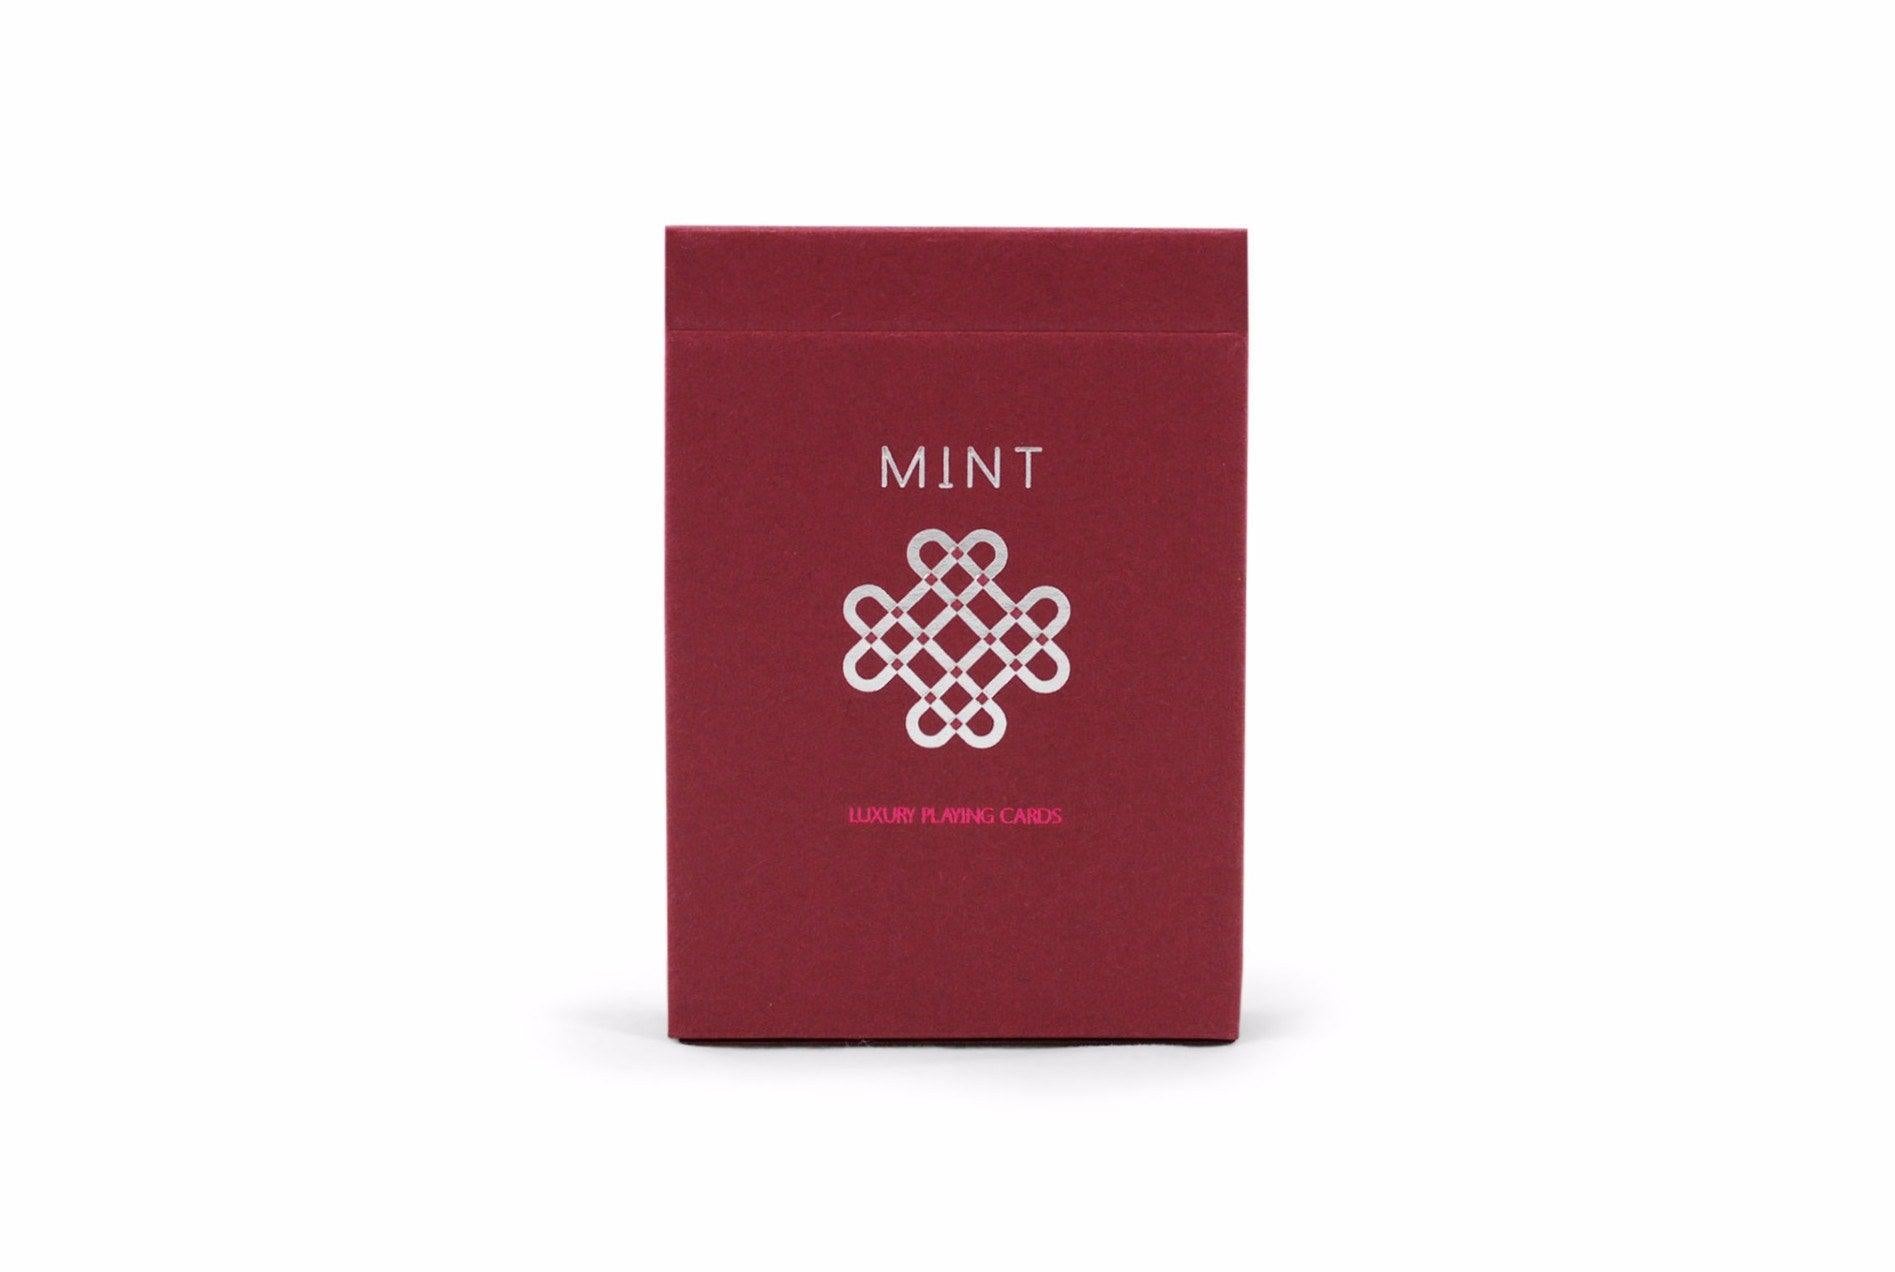 Raspberry Mint